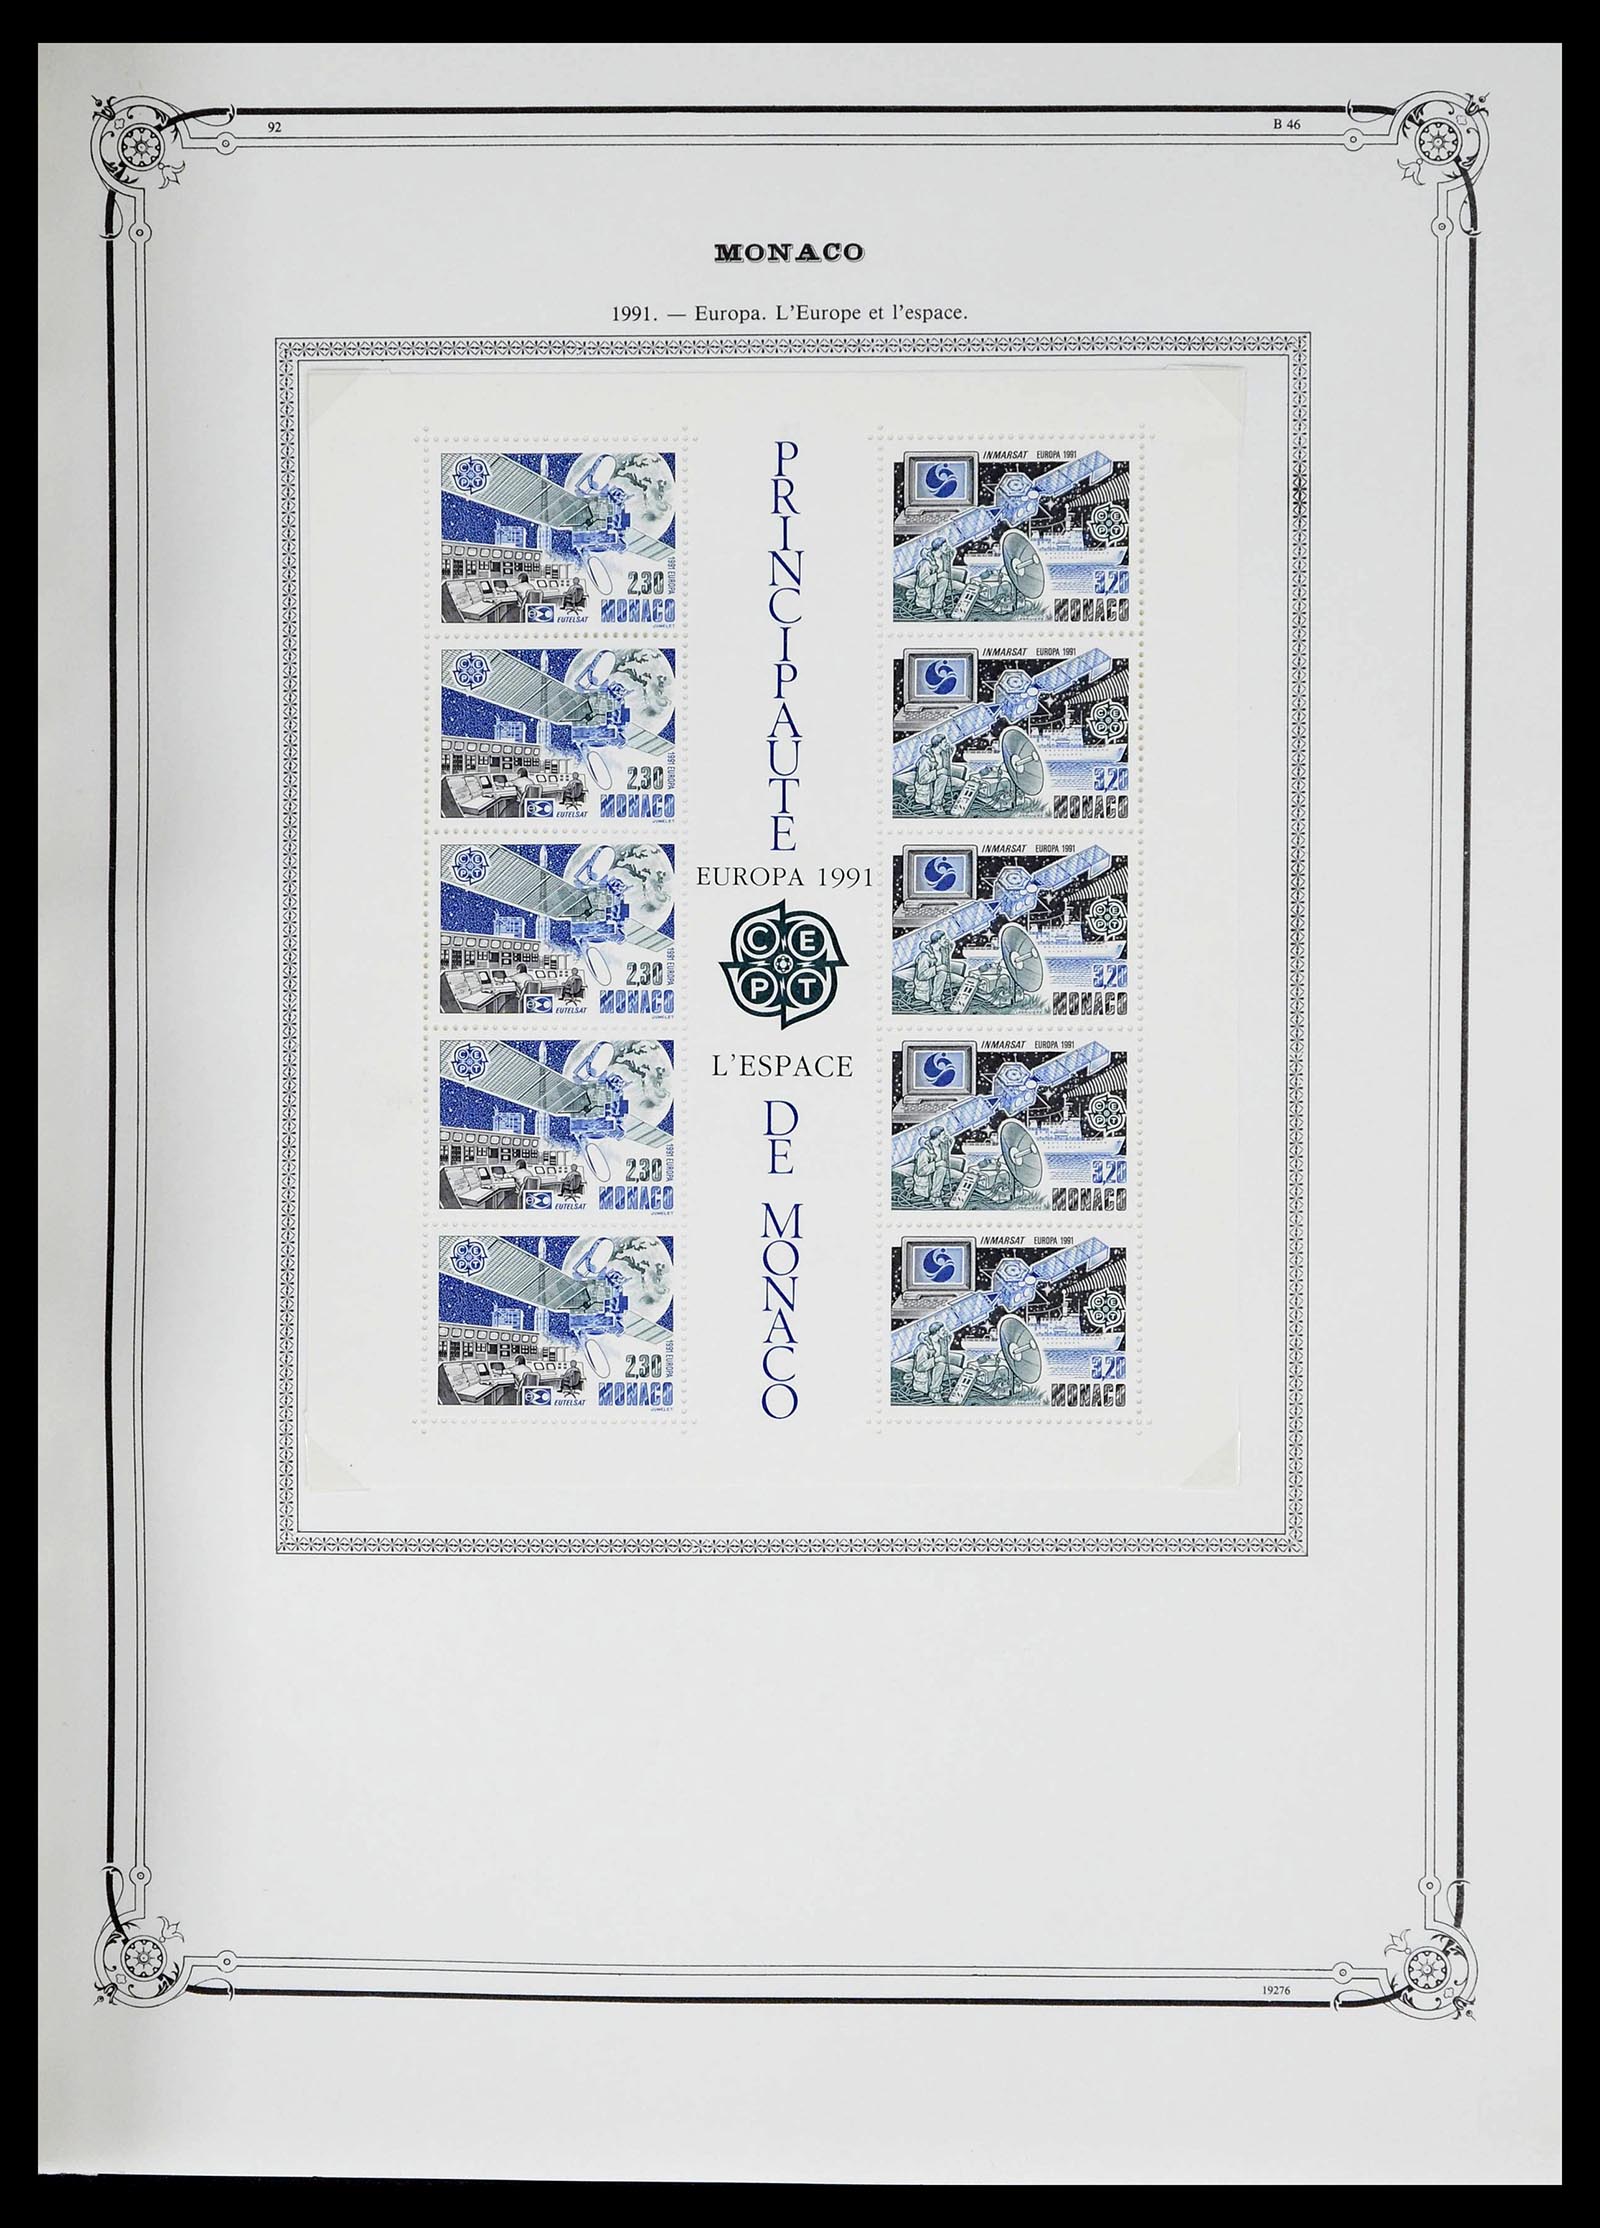 39133 0232 - Stamp collection 39133 Monaco 1885-1996.